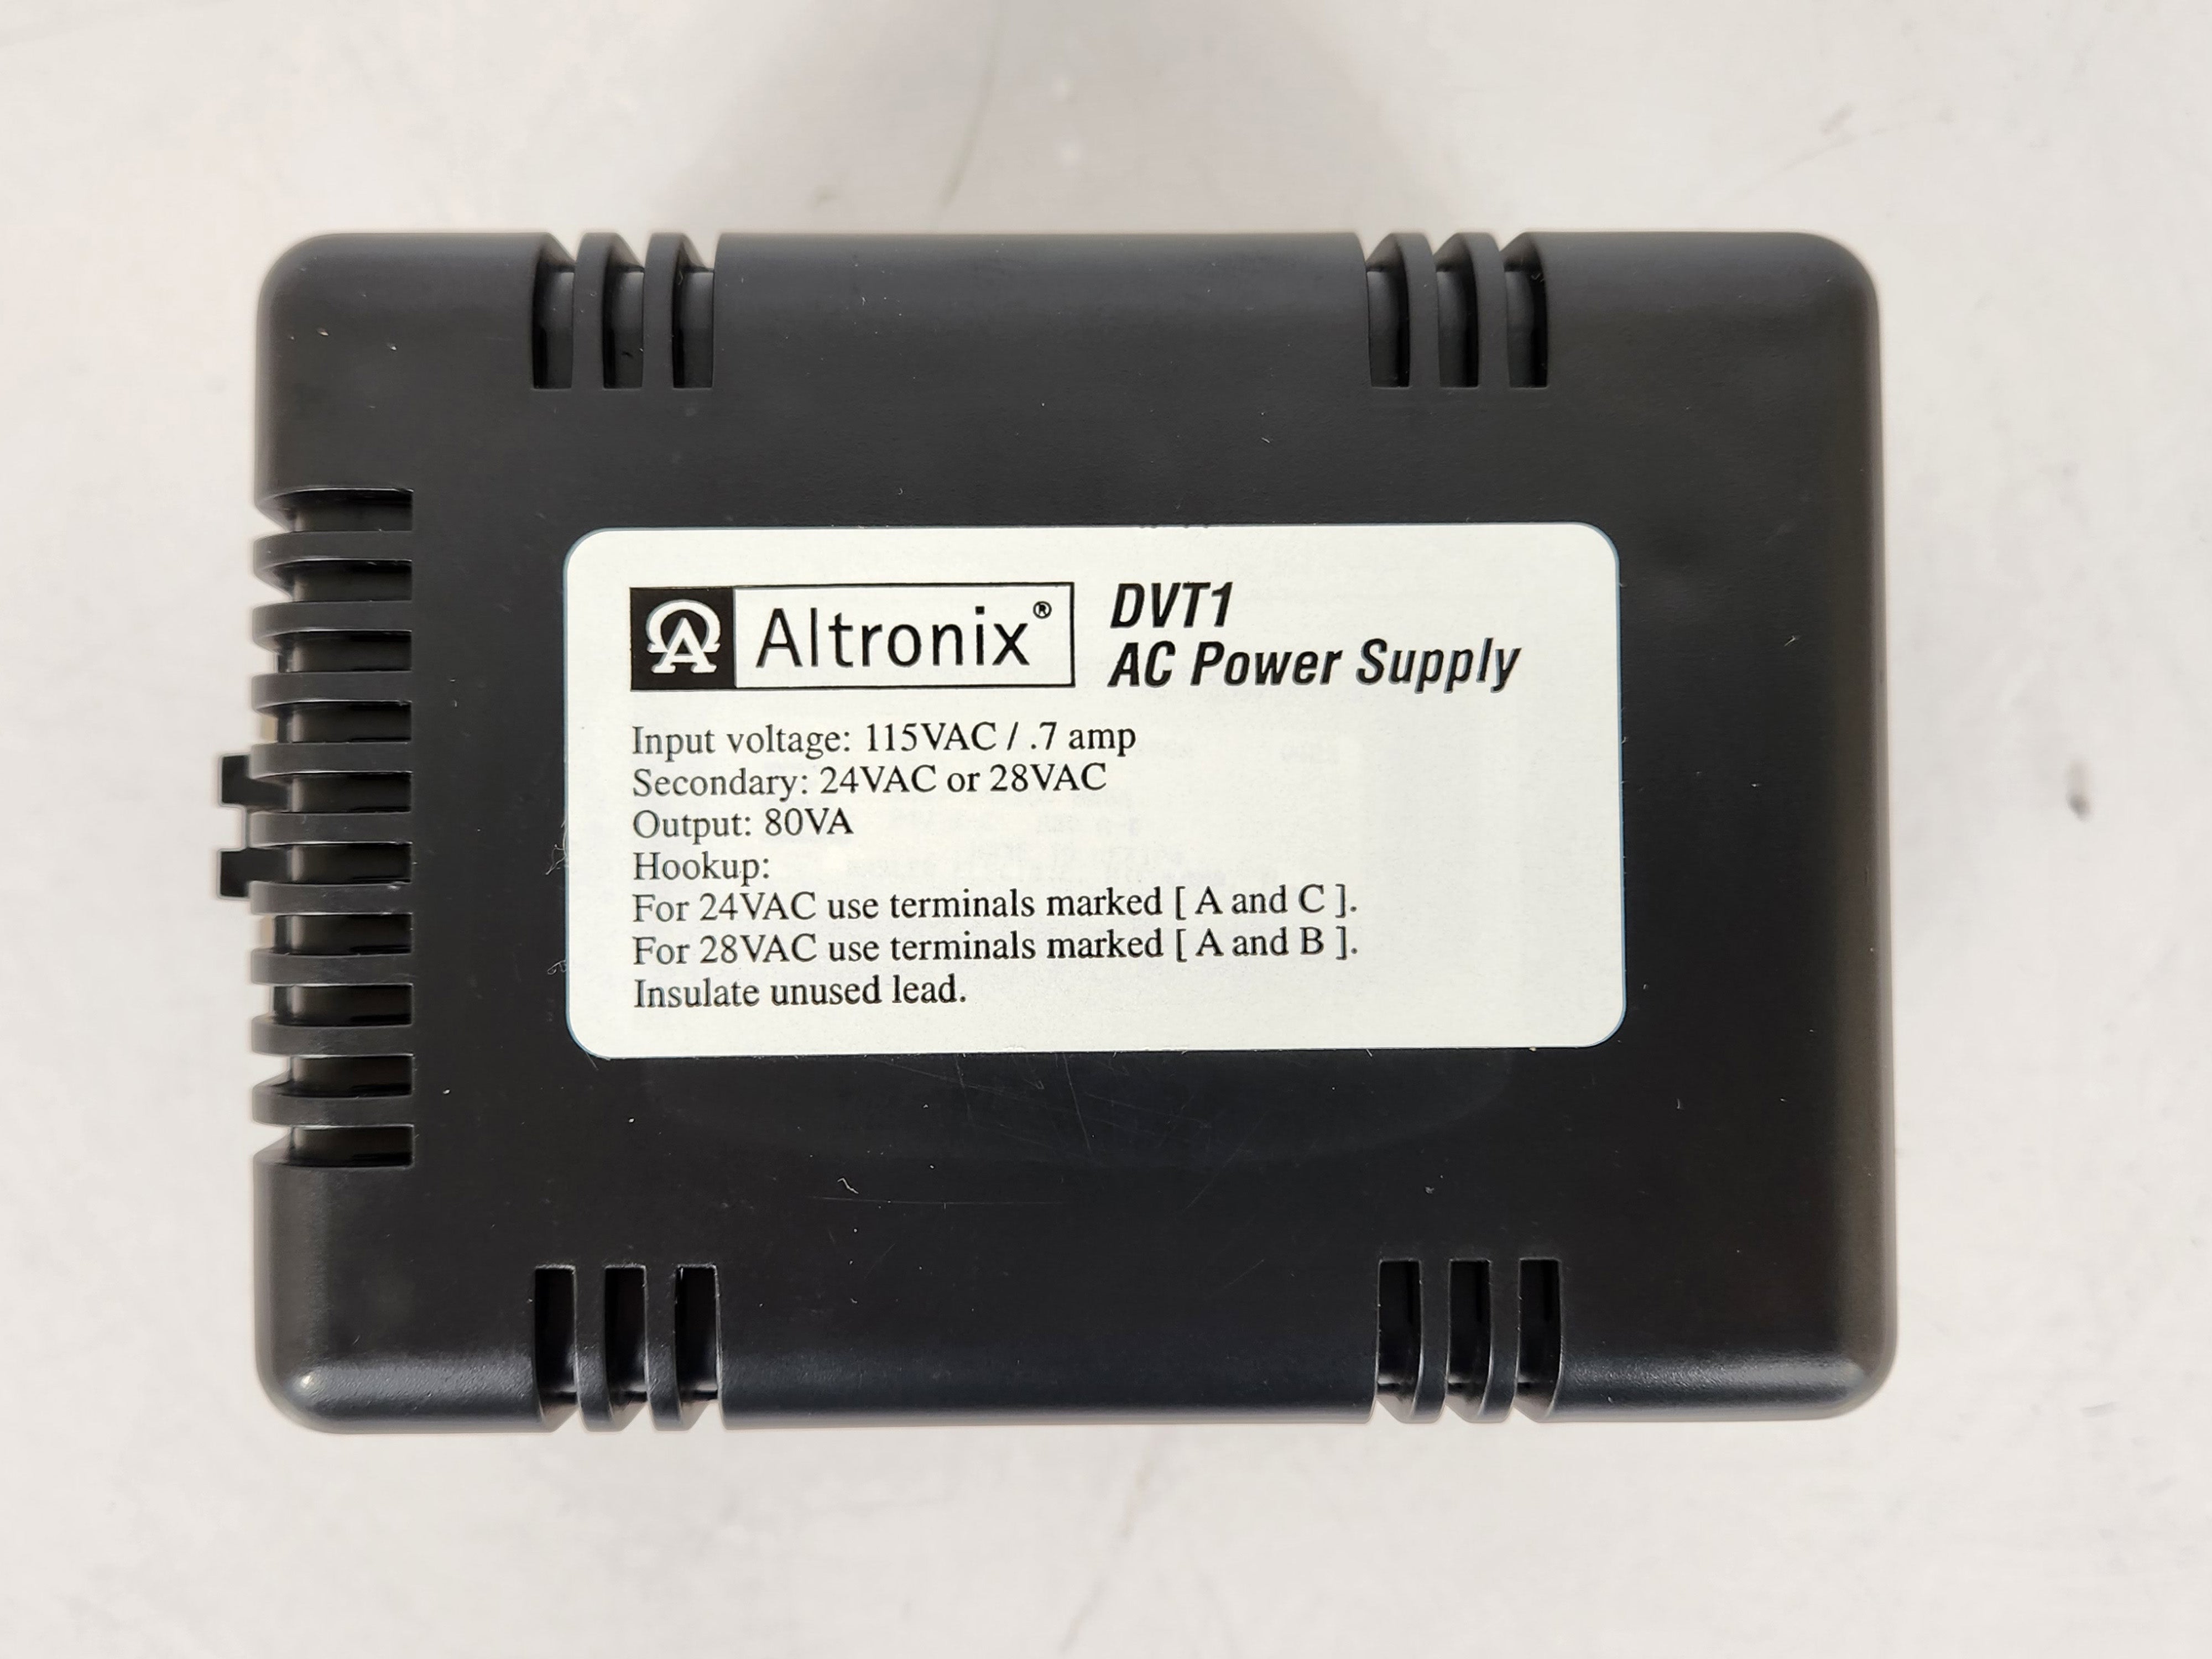 Altronix DVT1 Dual Output AC Power Supply